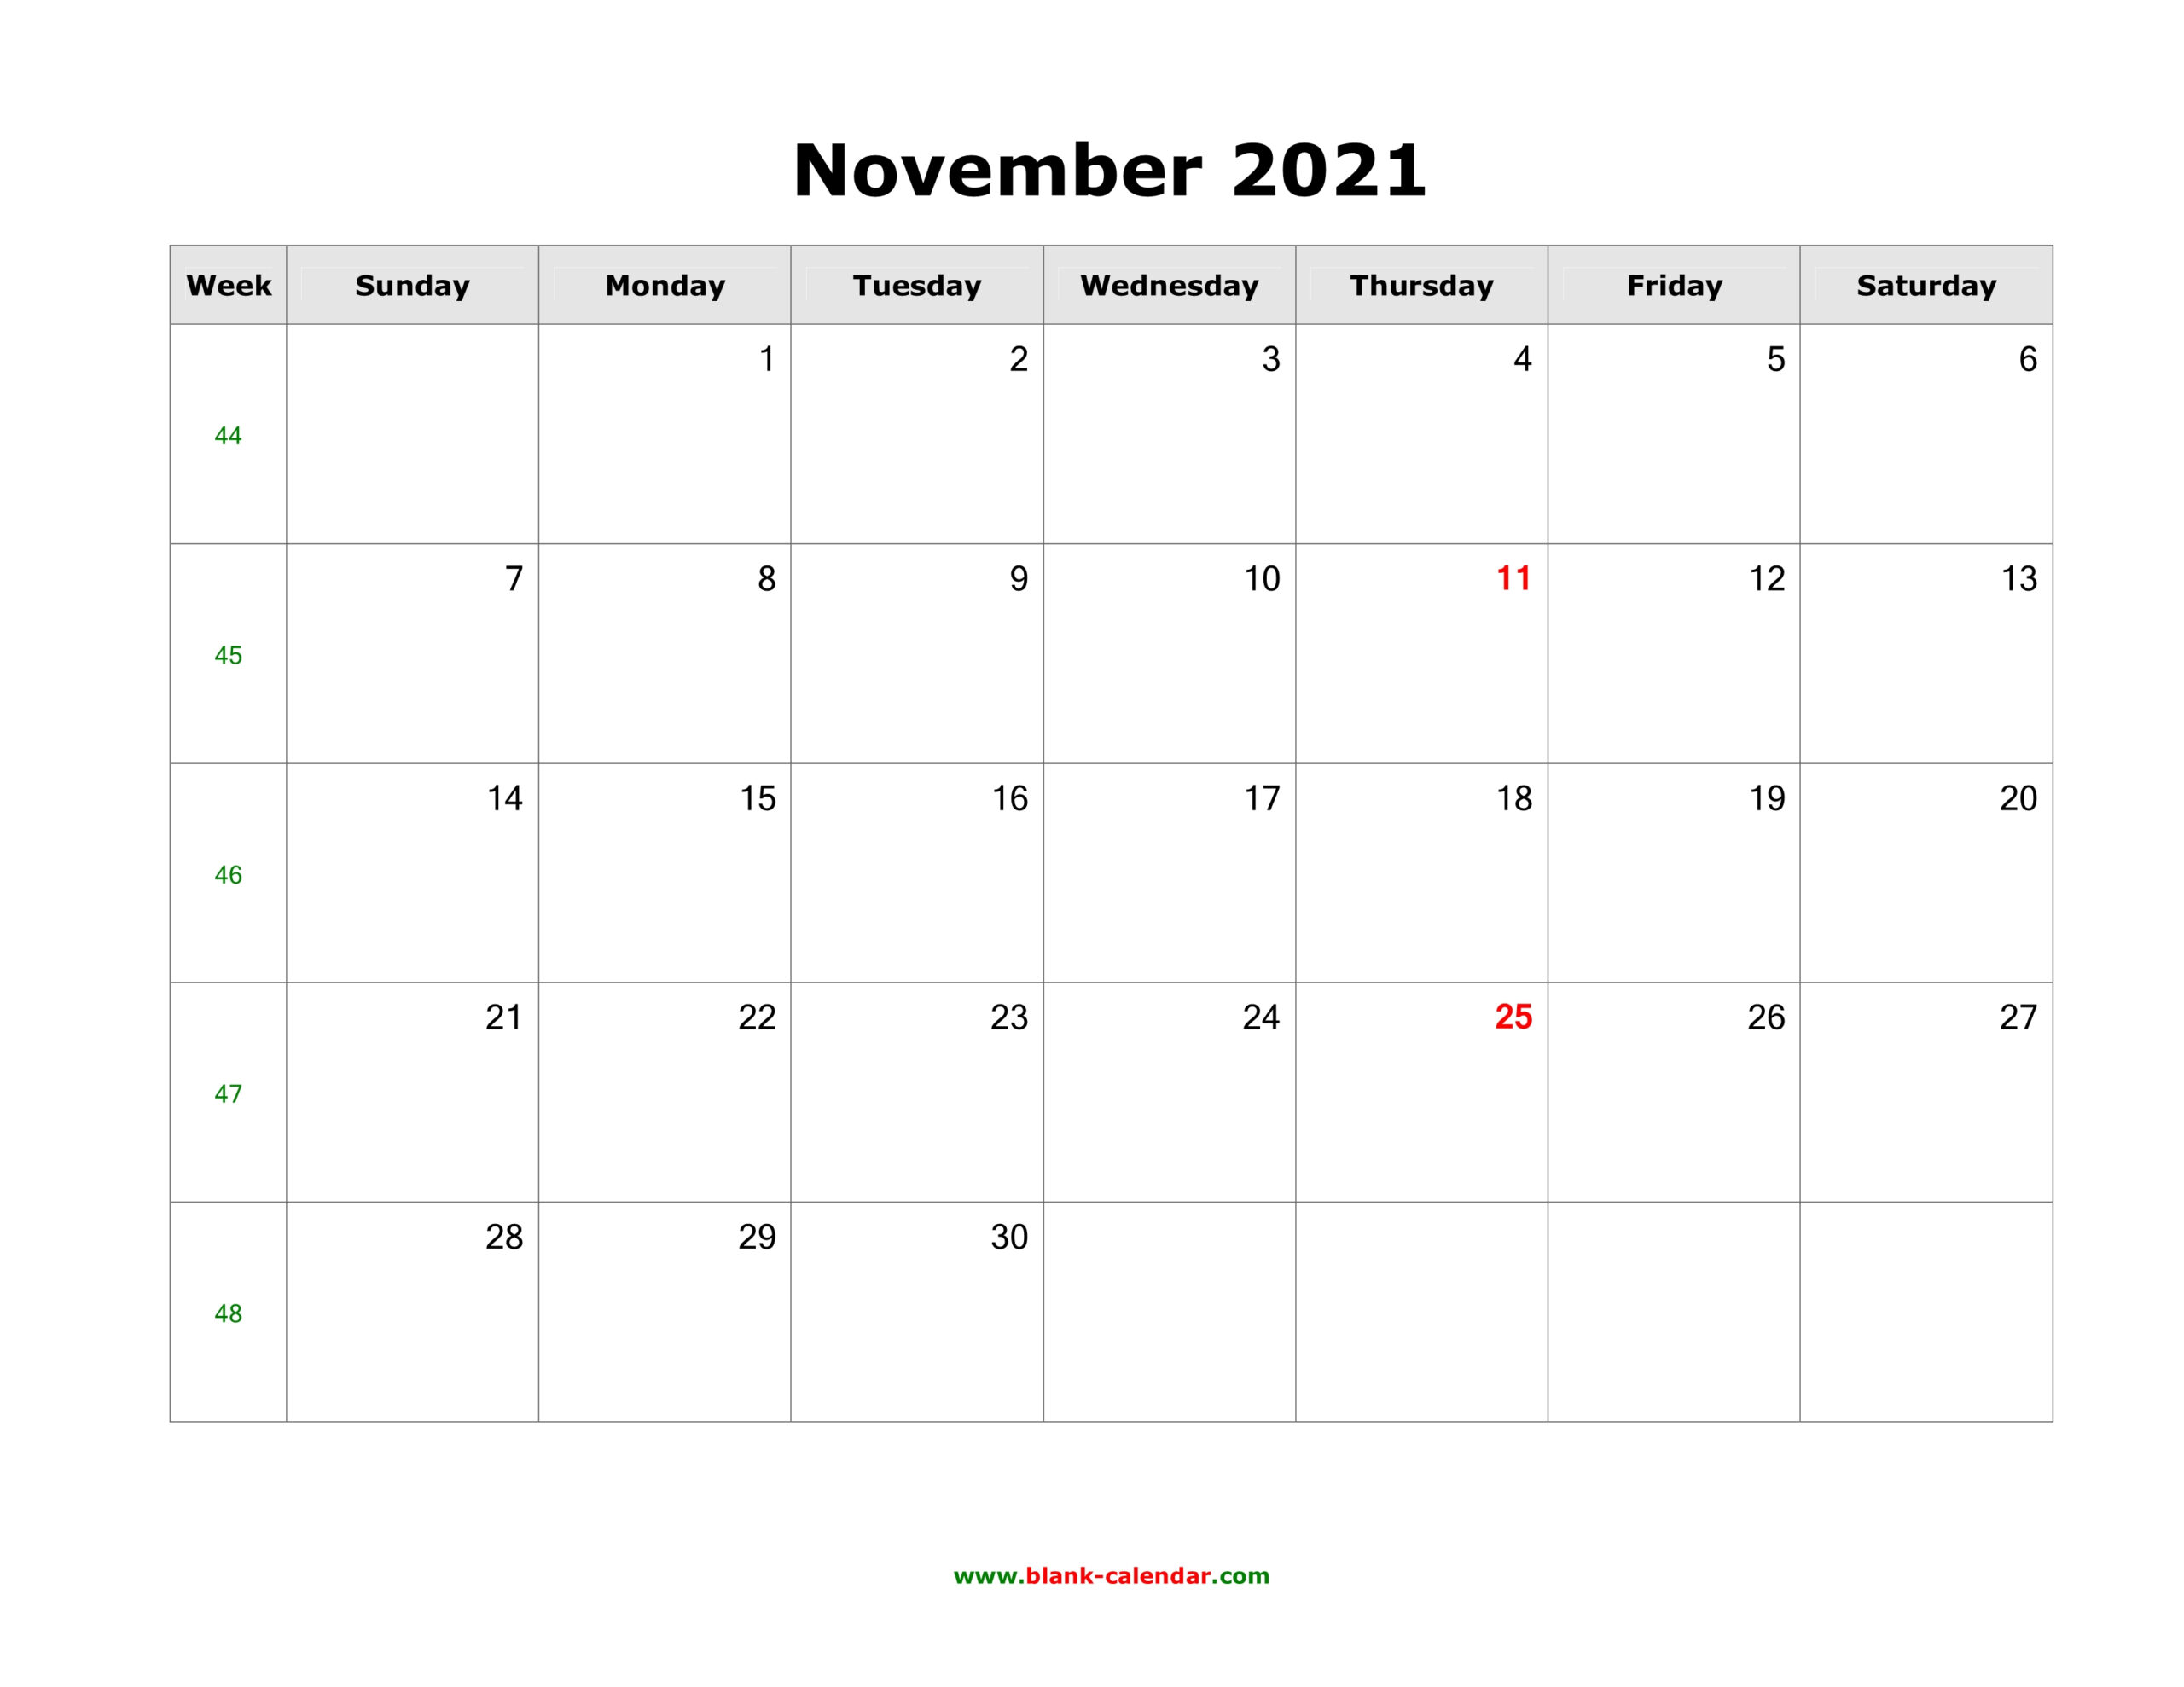 Download November 2021 Blank Calendar (Horizontal)